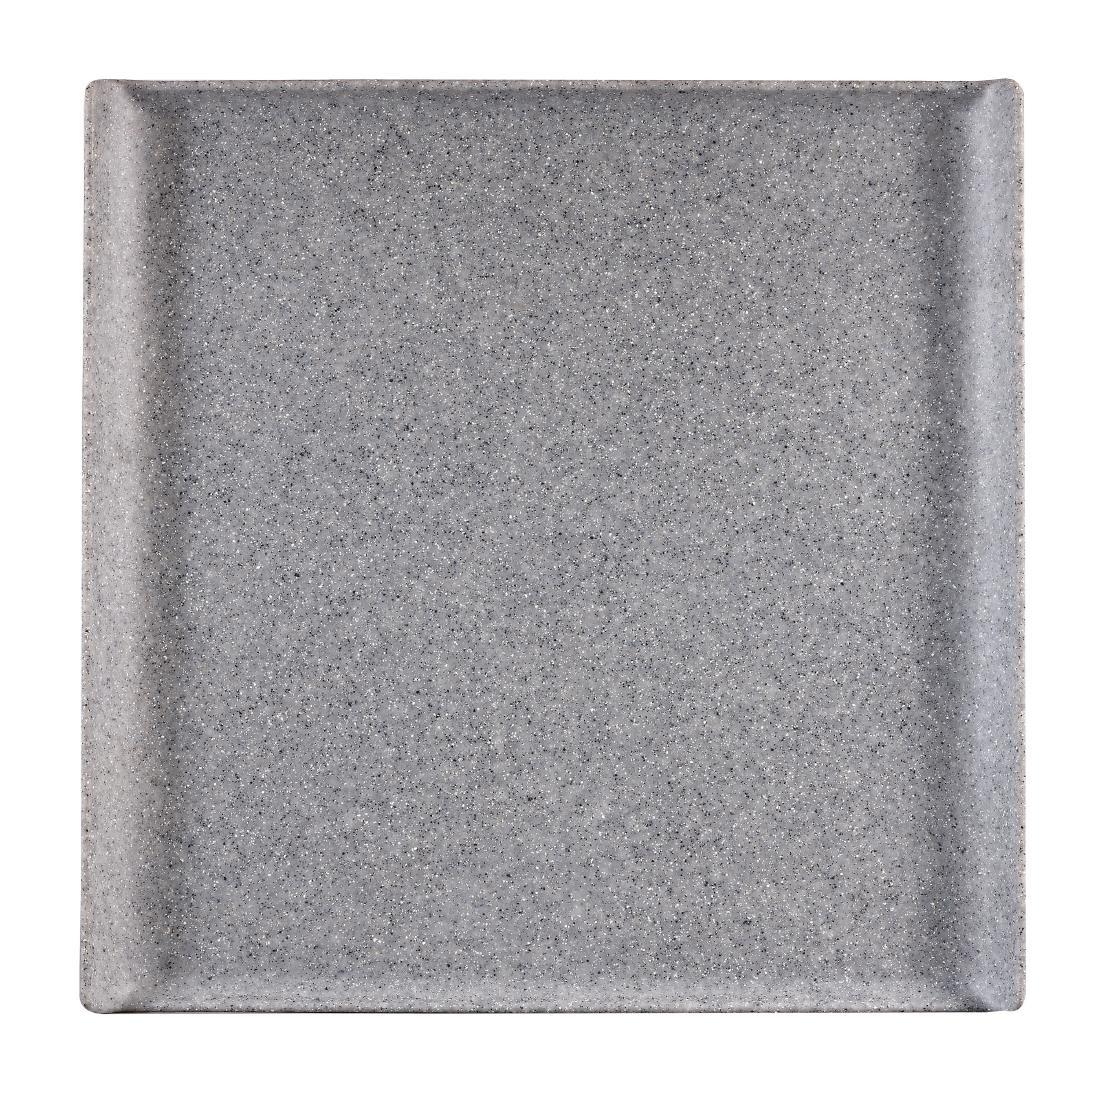 Churchill Melamine Square Trays Granite 303mm (Pack of 4) - CY772  - 1